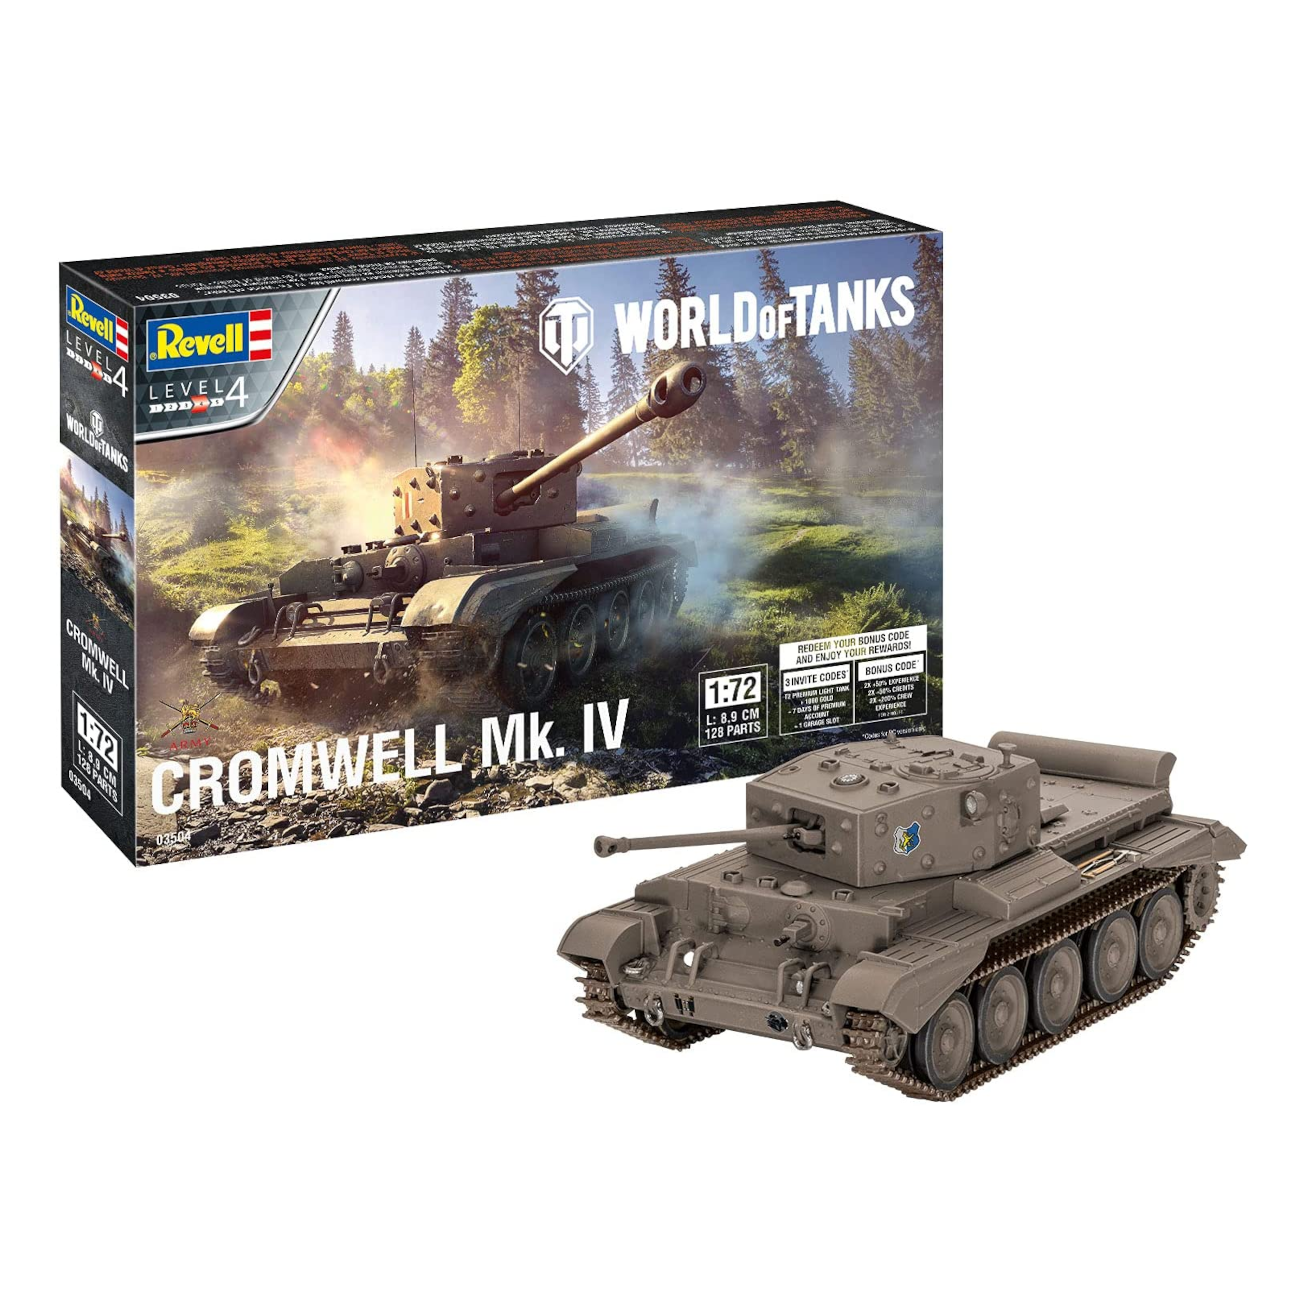 Cromwell Mk. IV - World of Tanks (03504)